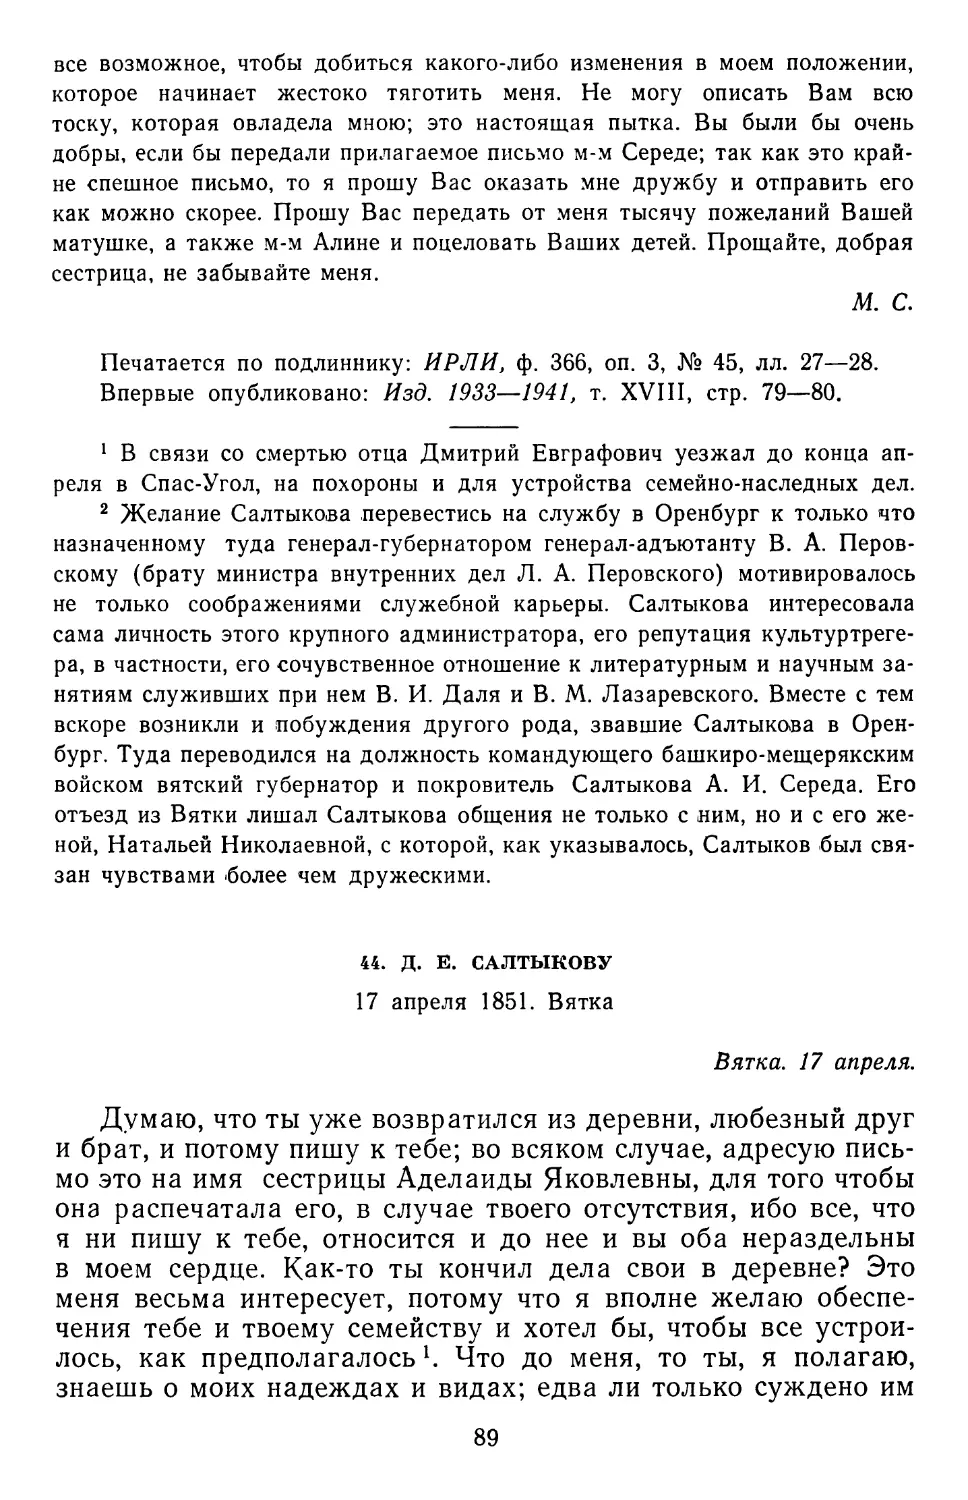 44.Д. Е. Салтыкову. 17 апреля 1851.Вятка